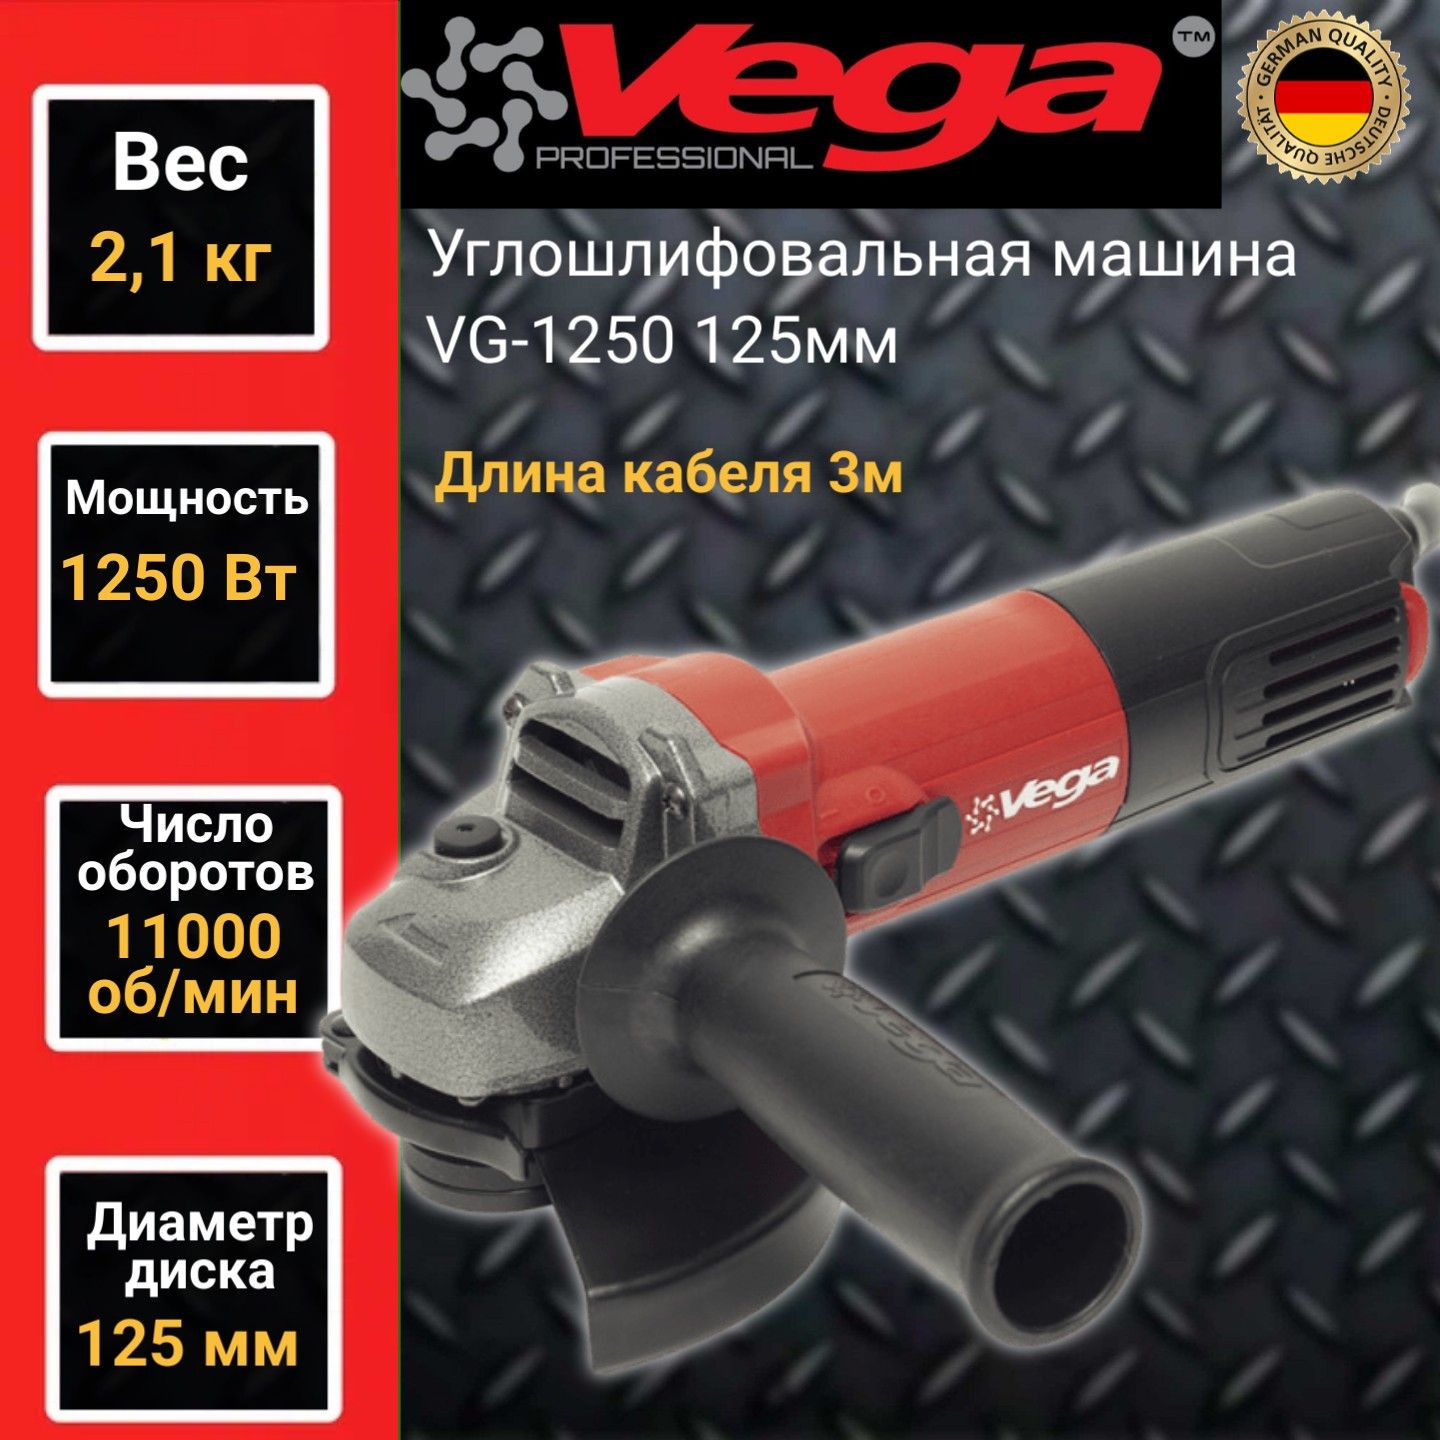 Углошлифовальная машина болгарка Vega Professional VG 1250, 125мм круг,1250Вт,11000об/мин углошлифовальная машинка ушм number one ag1250 125 pro 125мм 1250вт